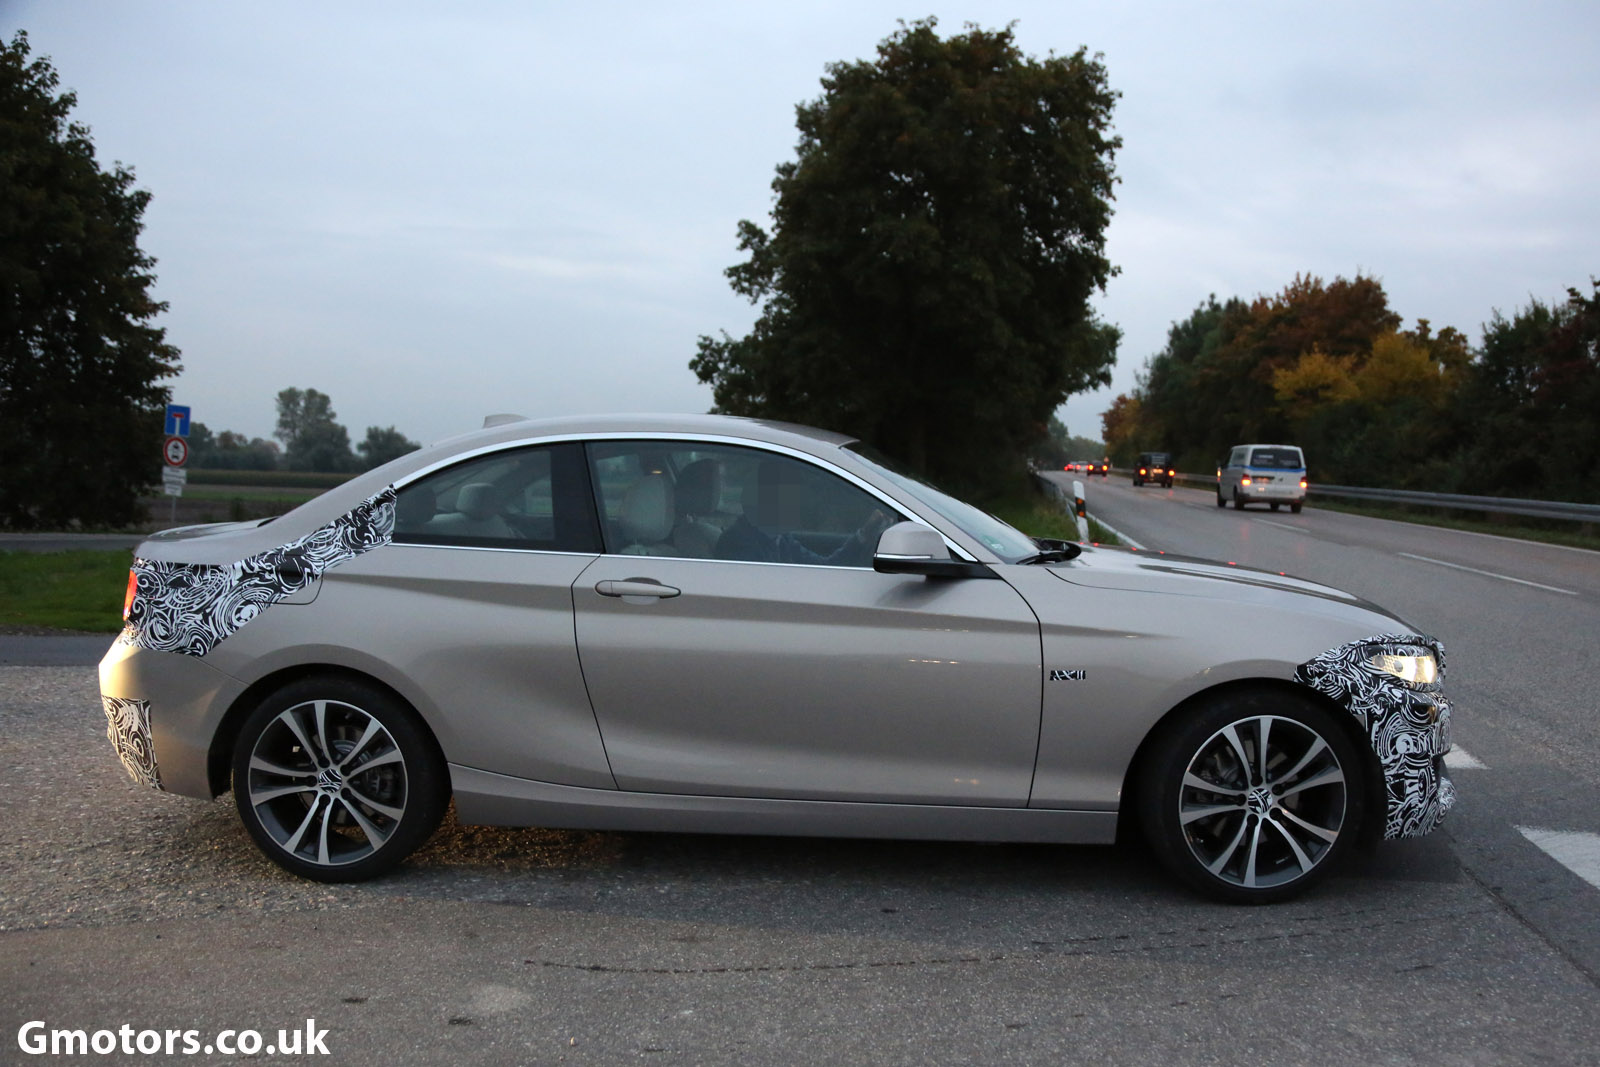 2014 BMW 2 Series Coupe HD wallpapers, Desktop wallpaper - most viewed